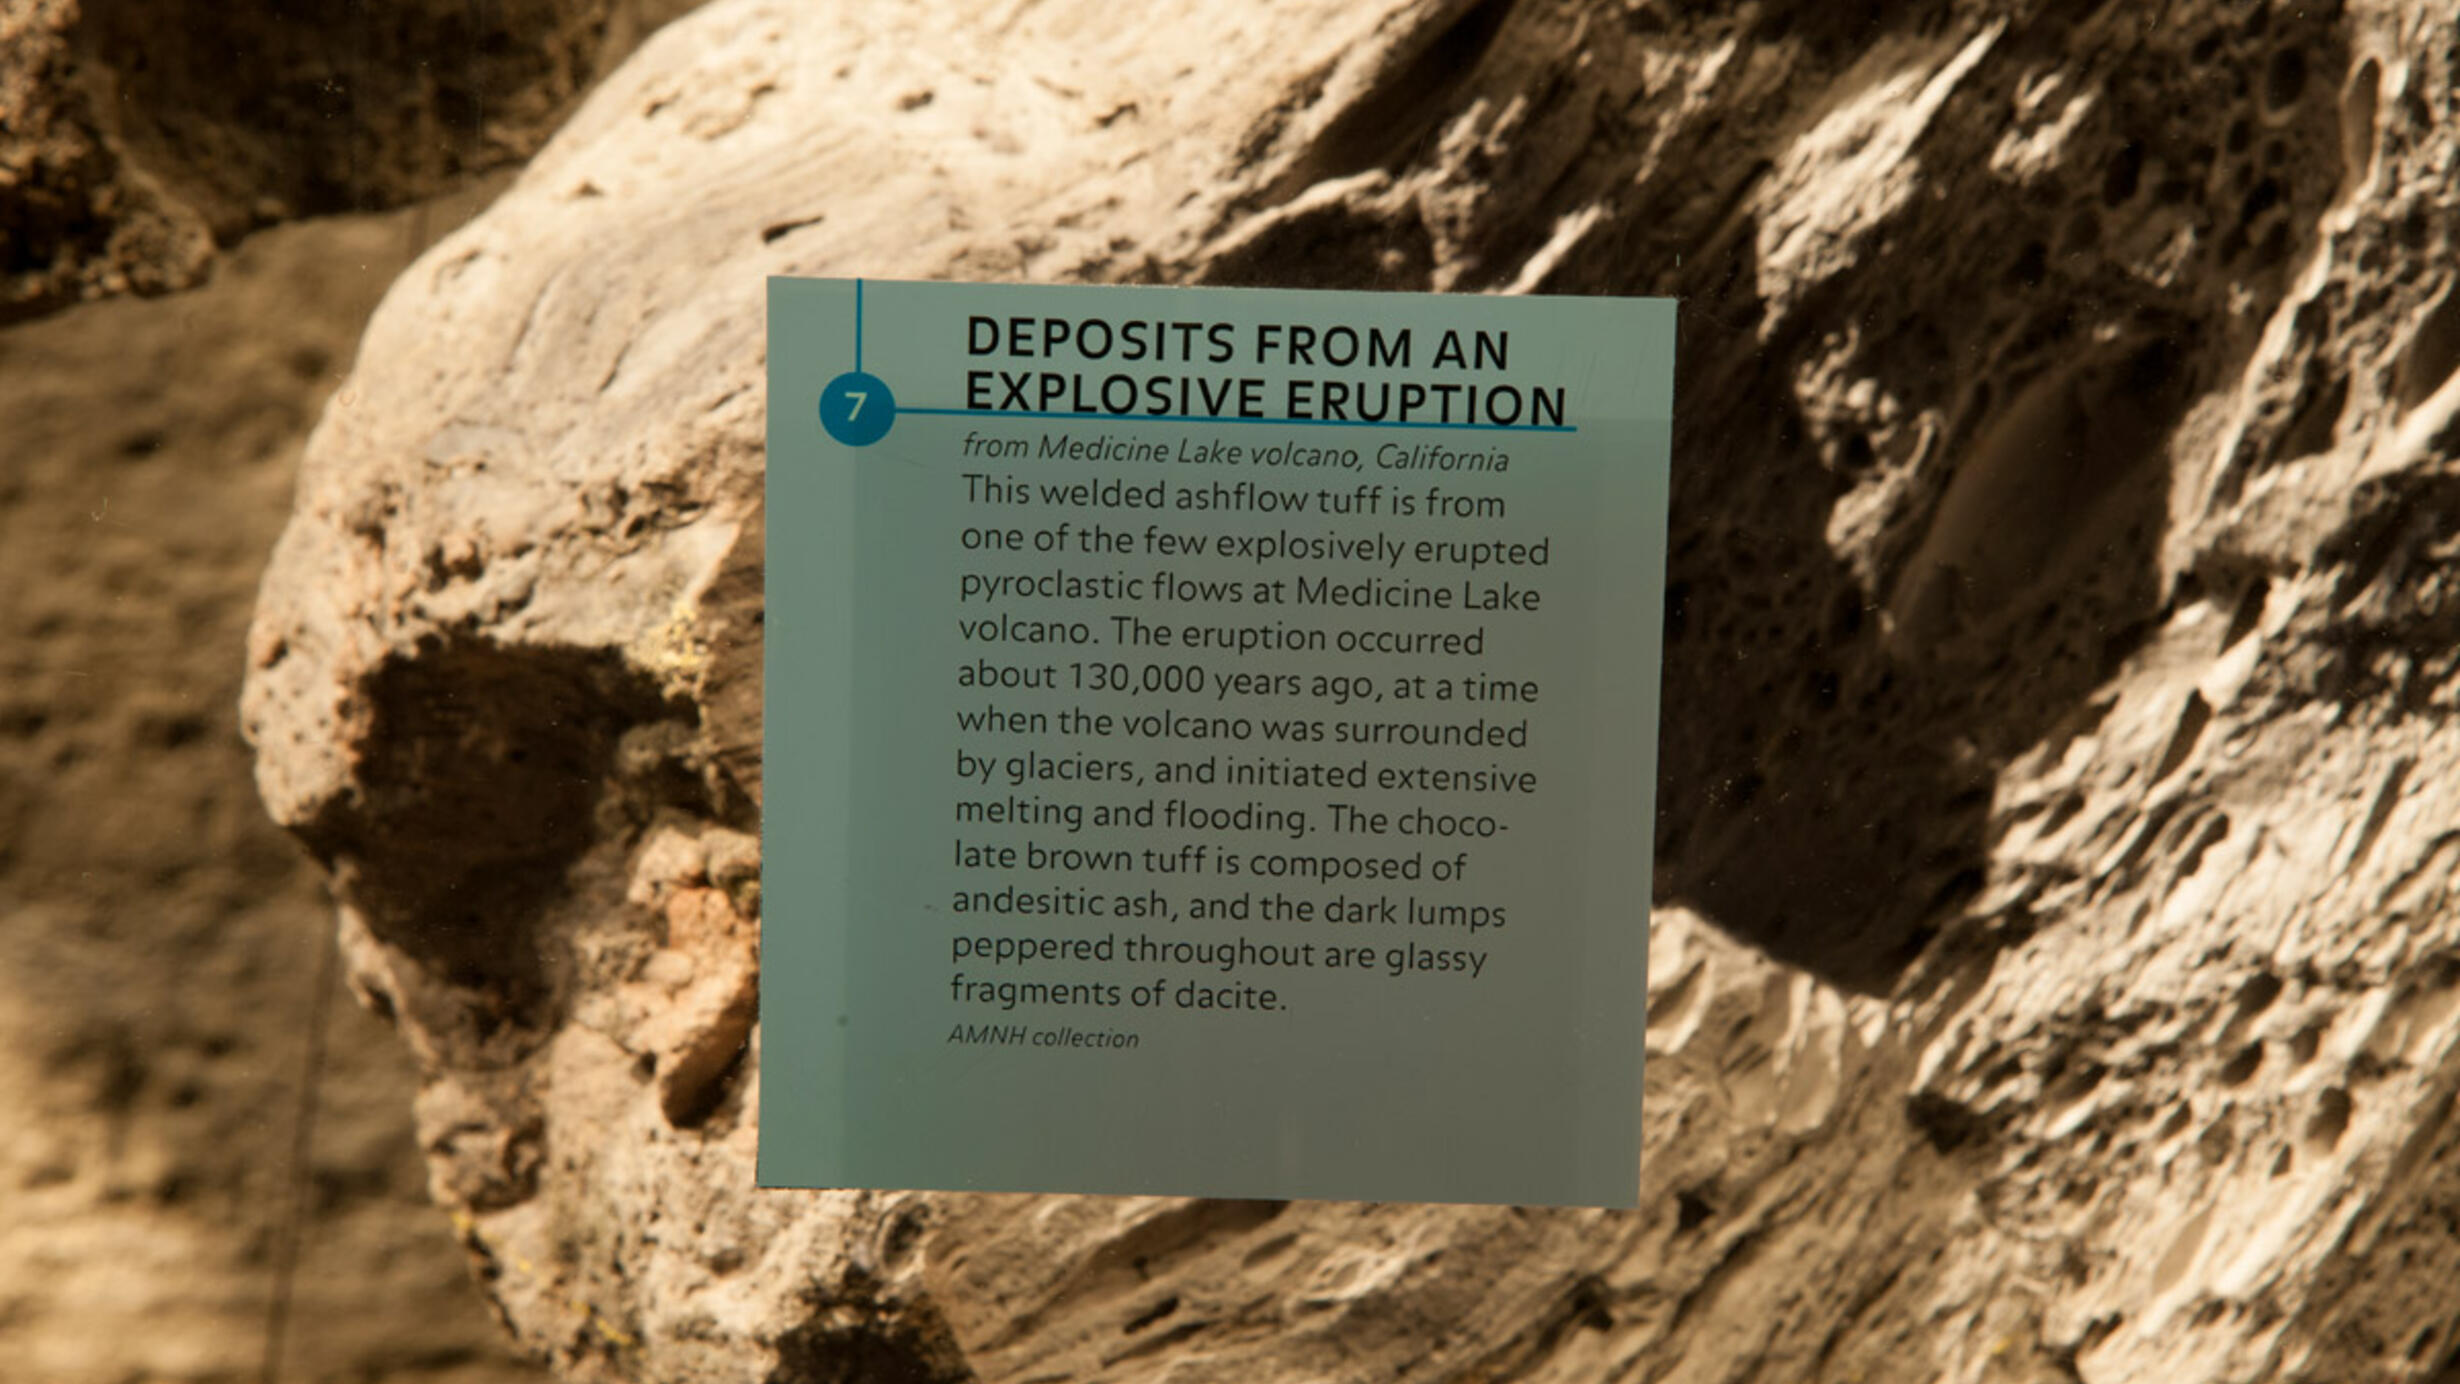 Description of Deposits from an Explosive Eruption